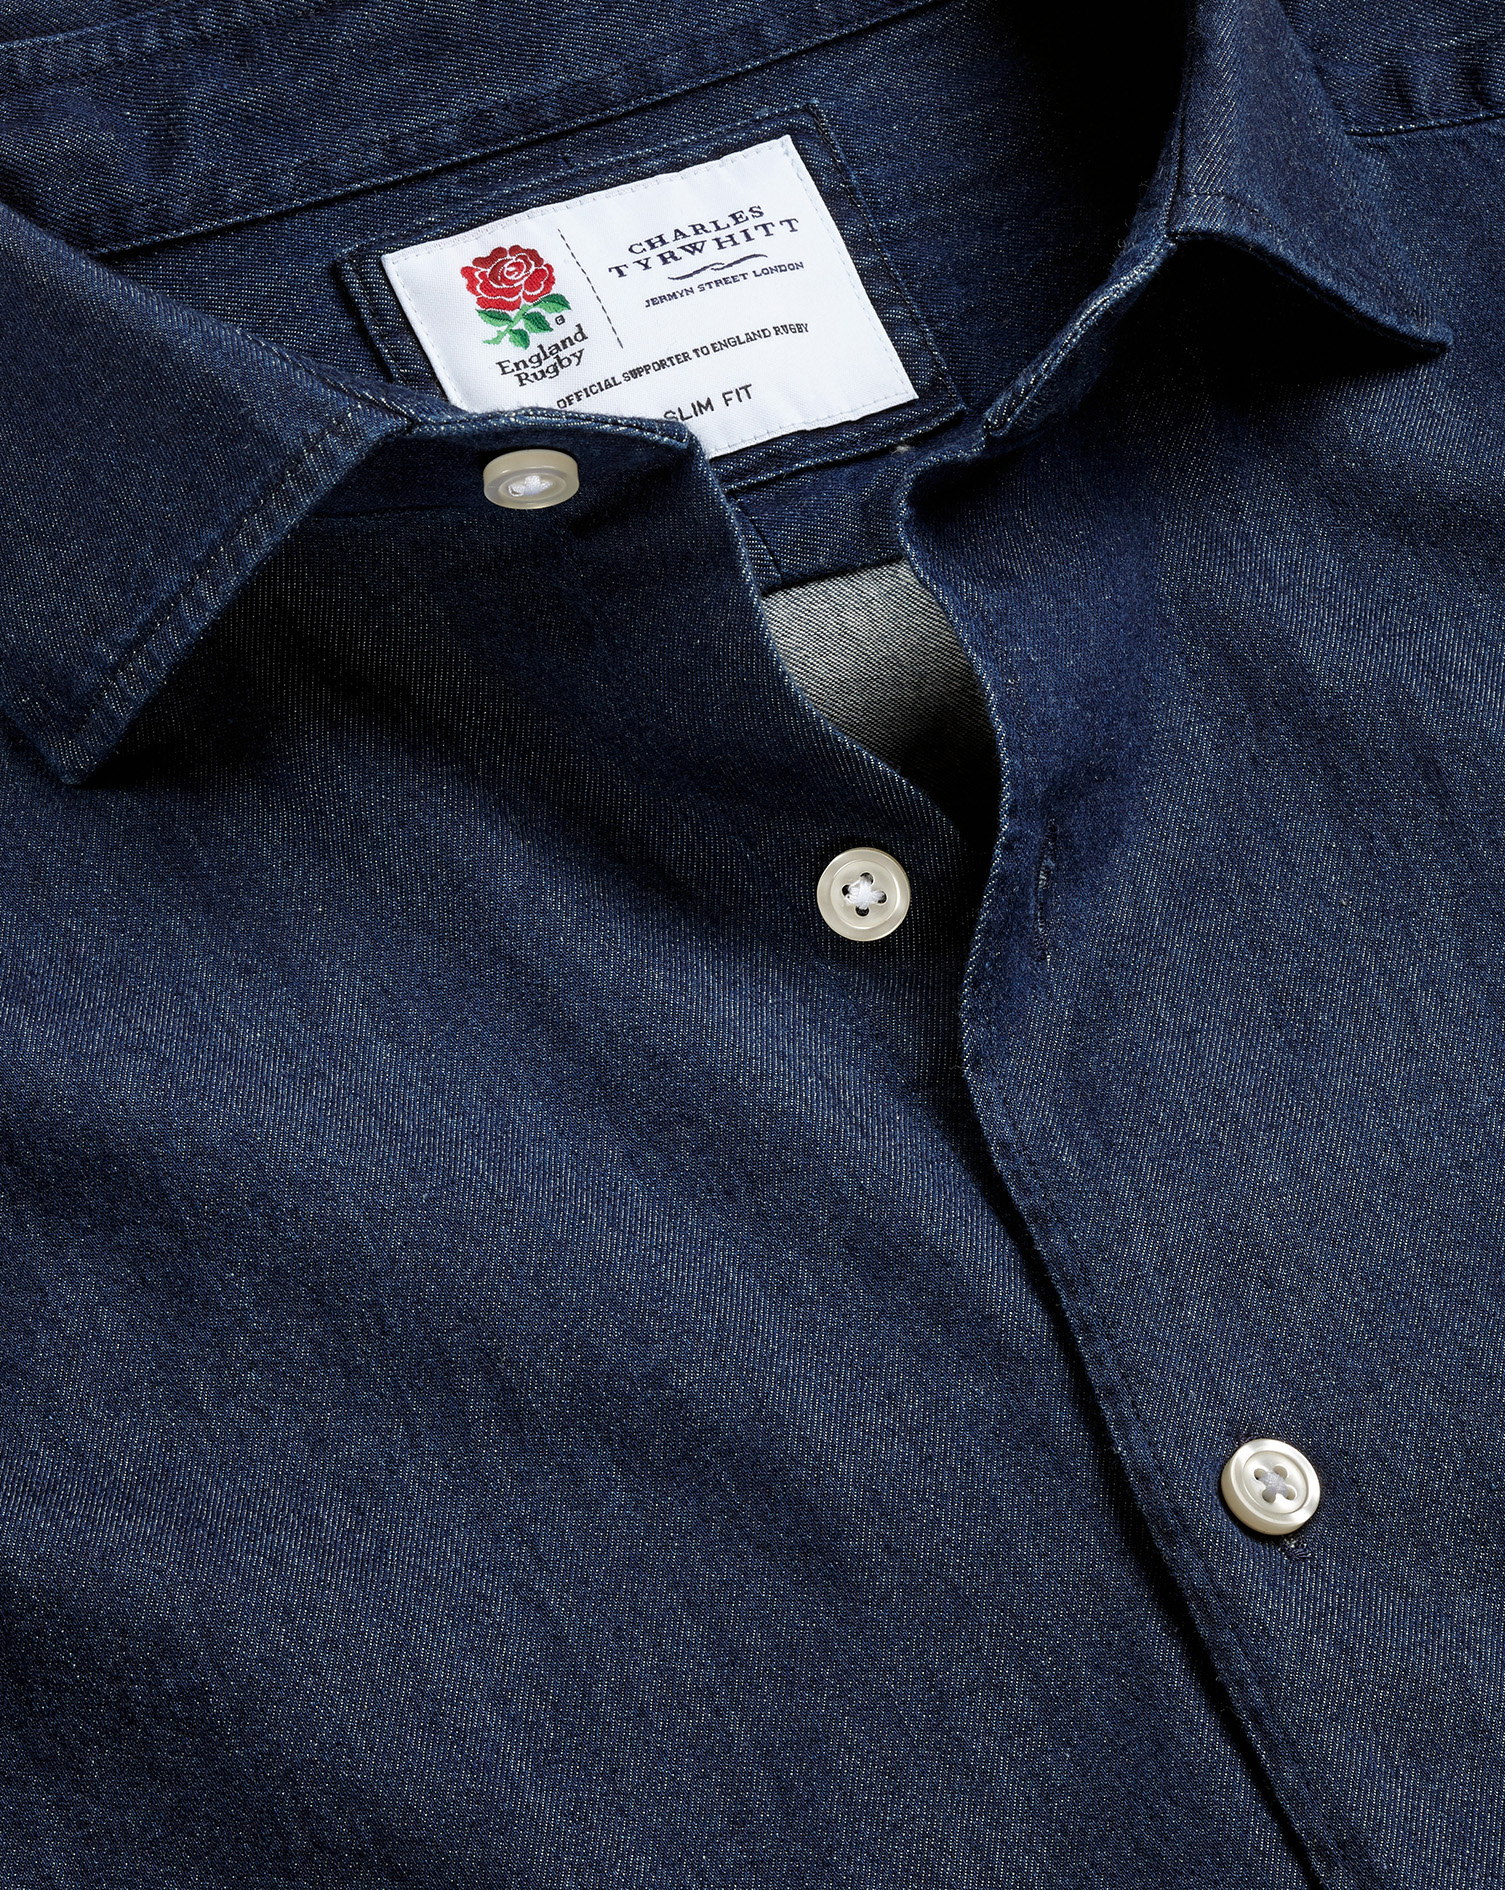 Men's Charles Tyrwhitt England Rugby Denim Shirt - Denim Blue Single Cuff Size XL Cotton
